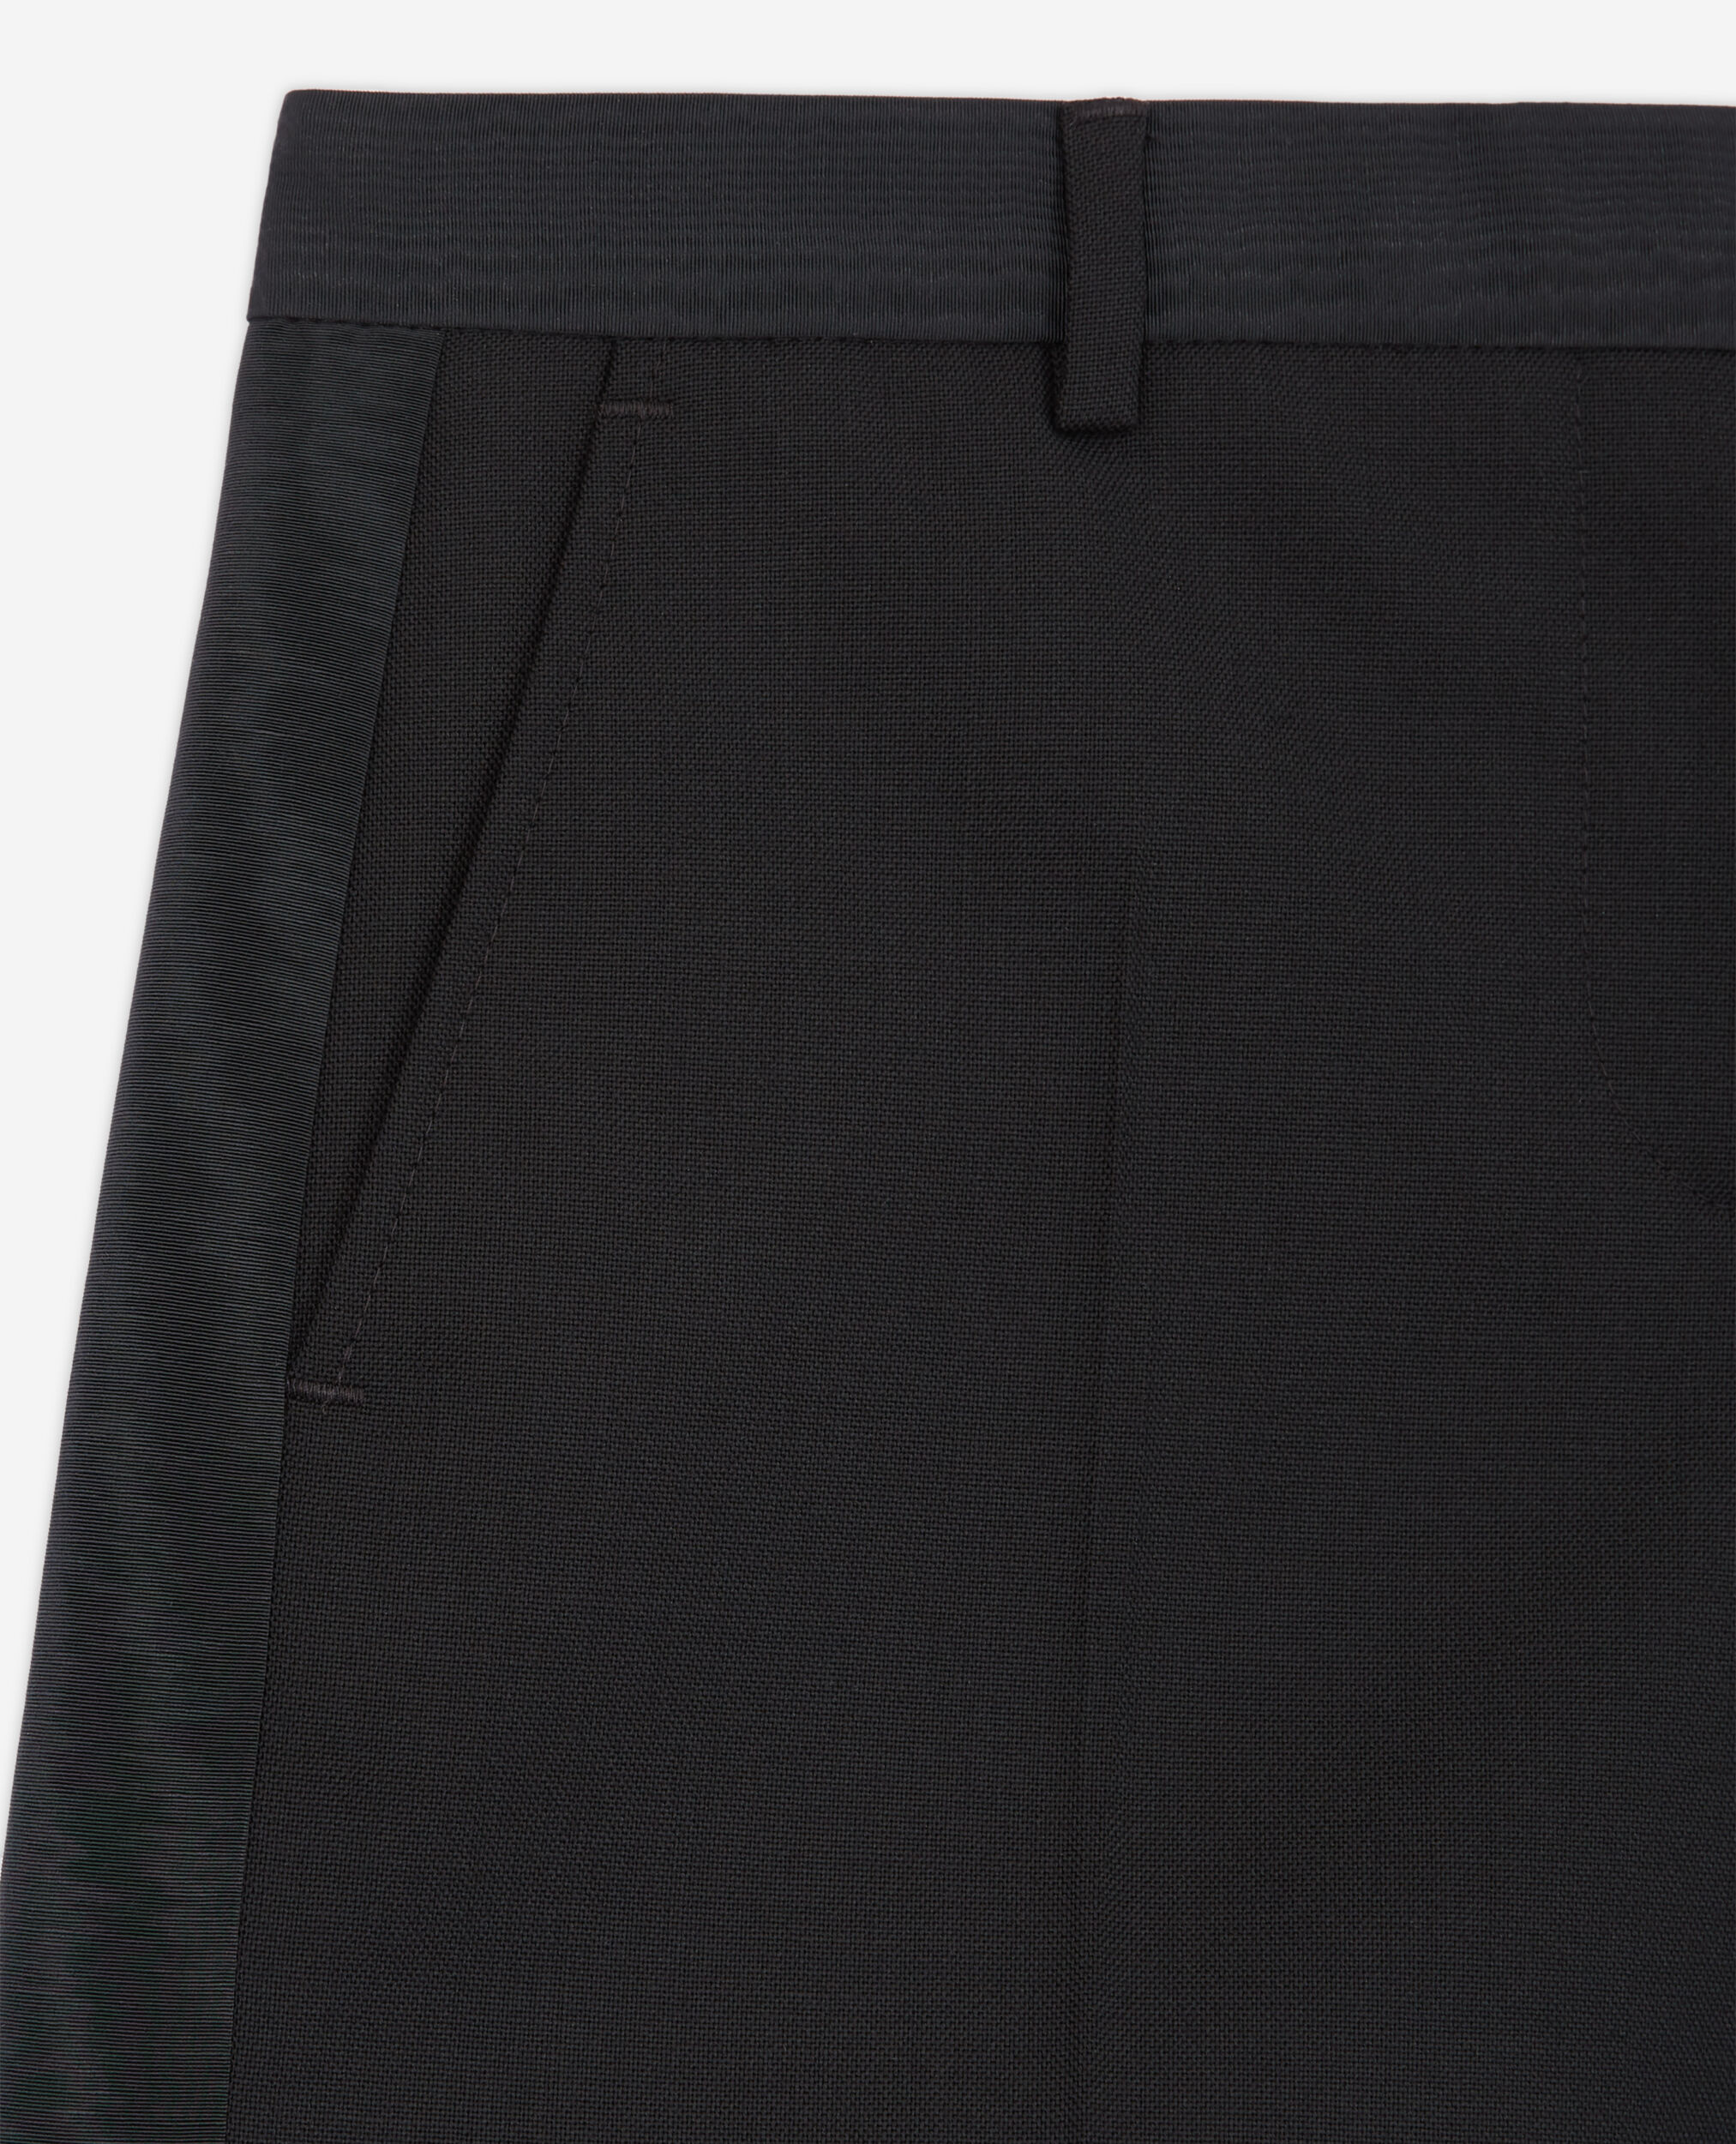 Black wool shorts, BLACK, hi-res image number null